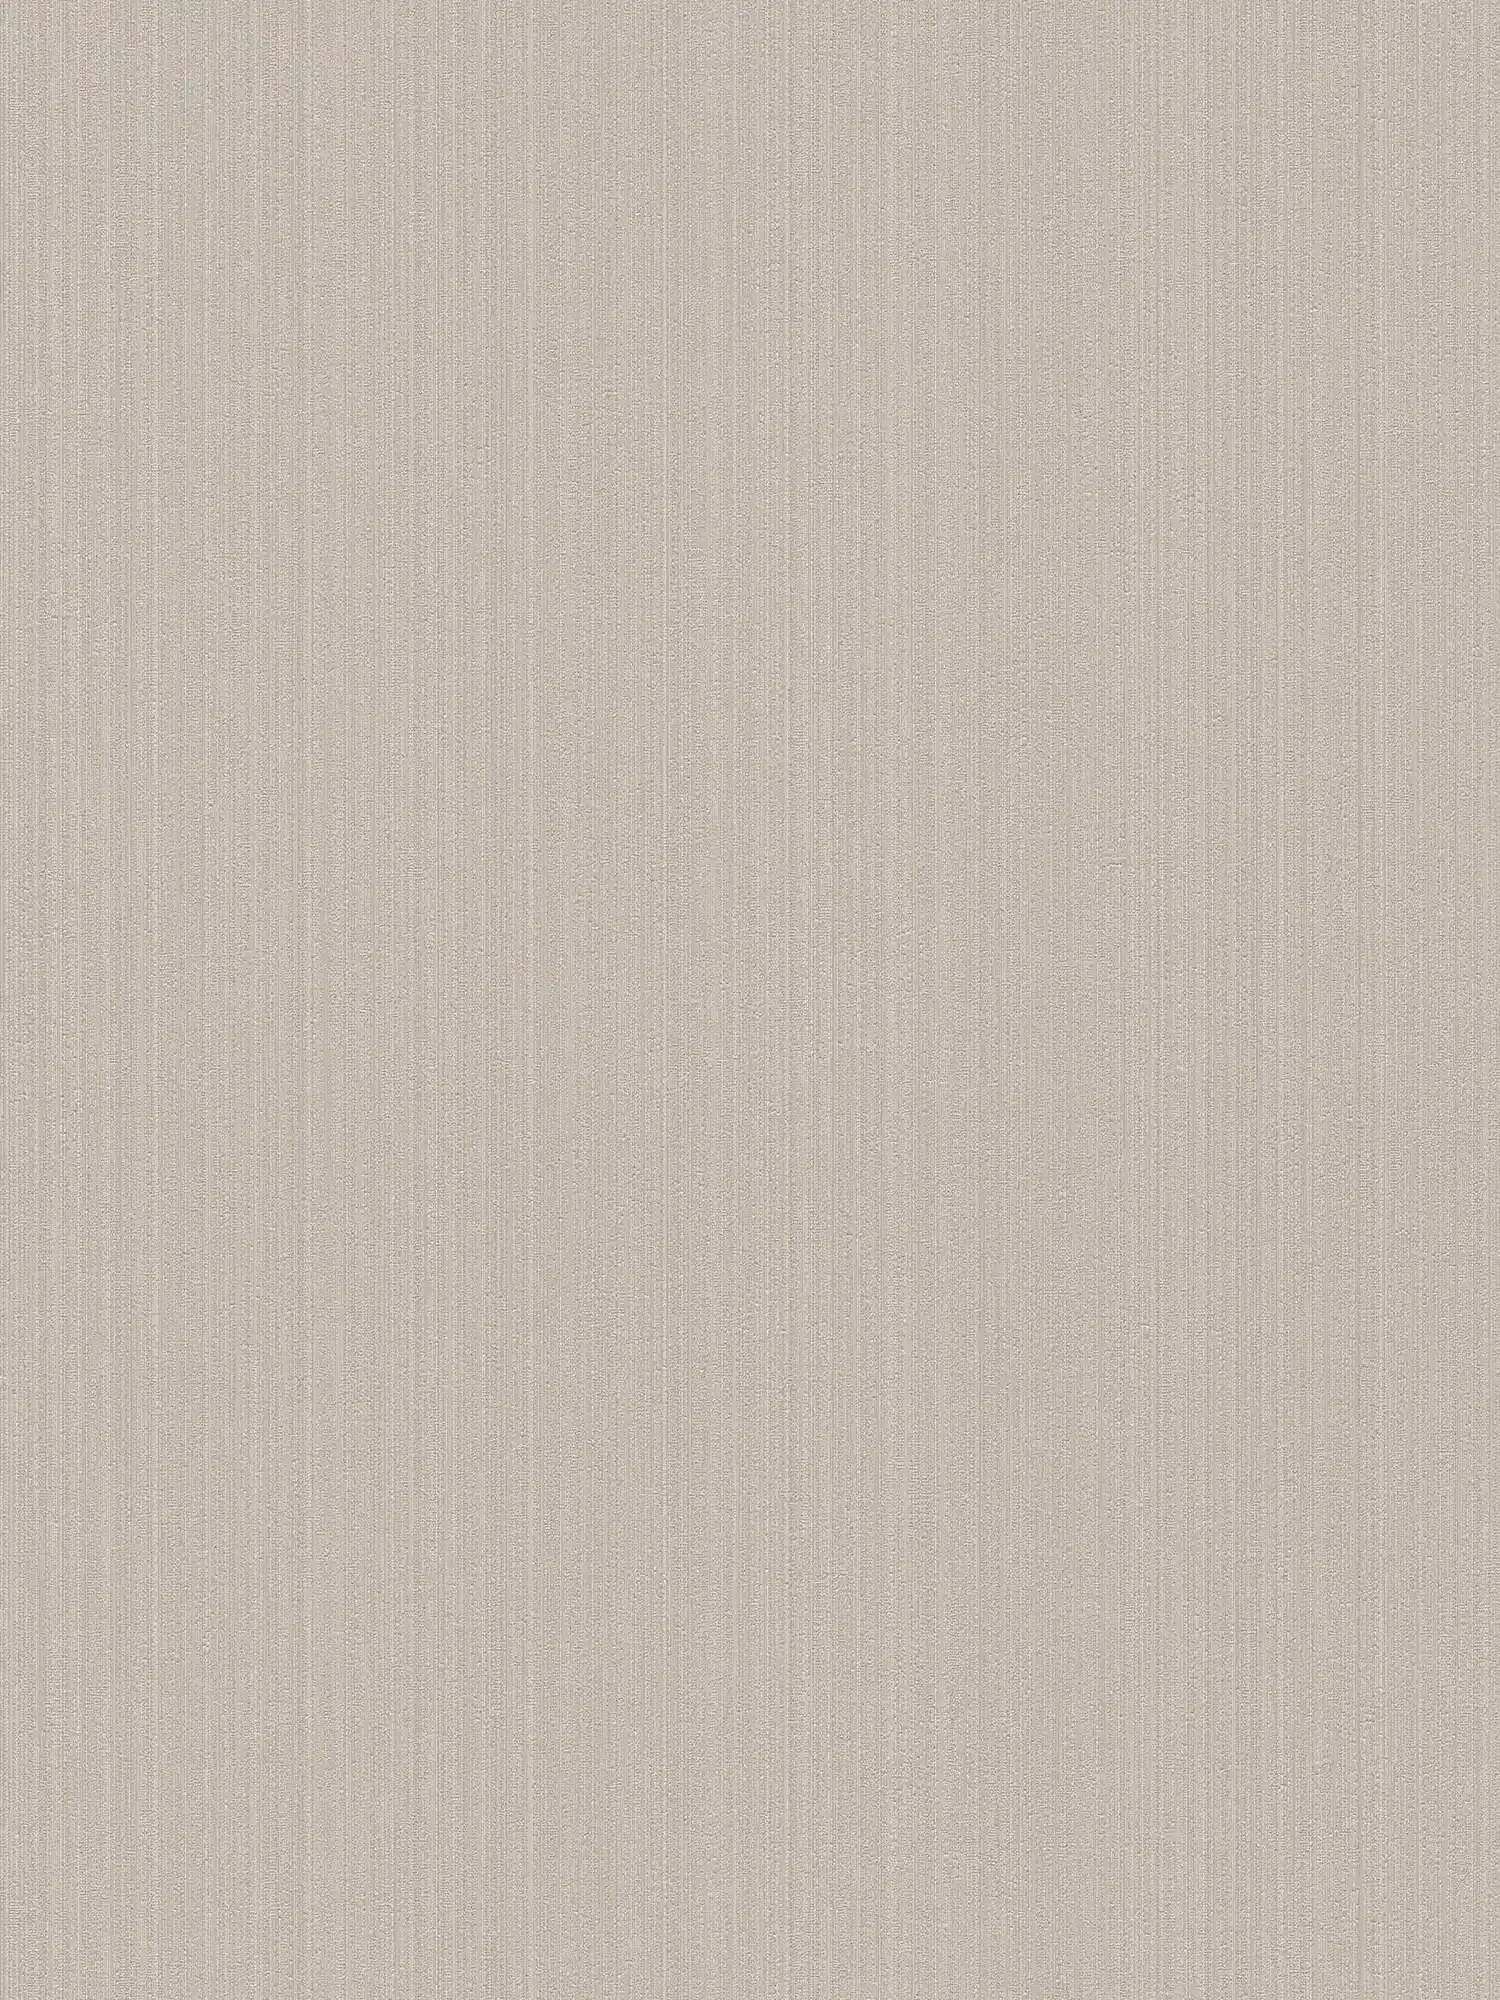 Plain wallpaper beige grey with satin finish
